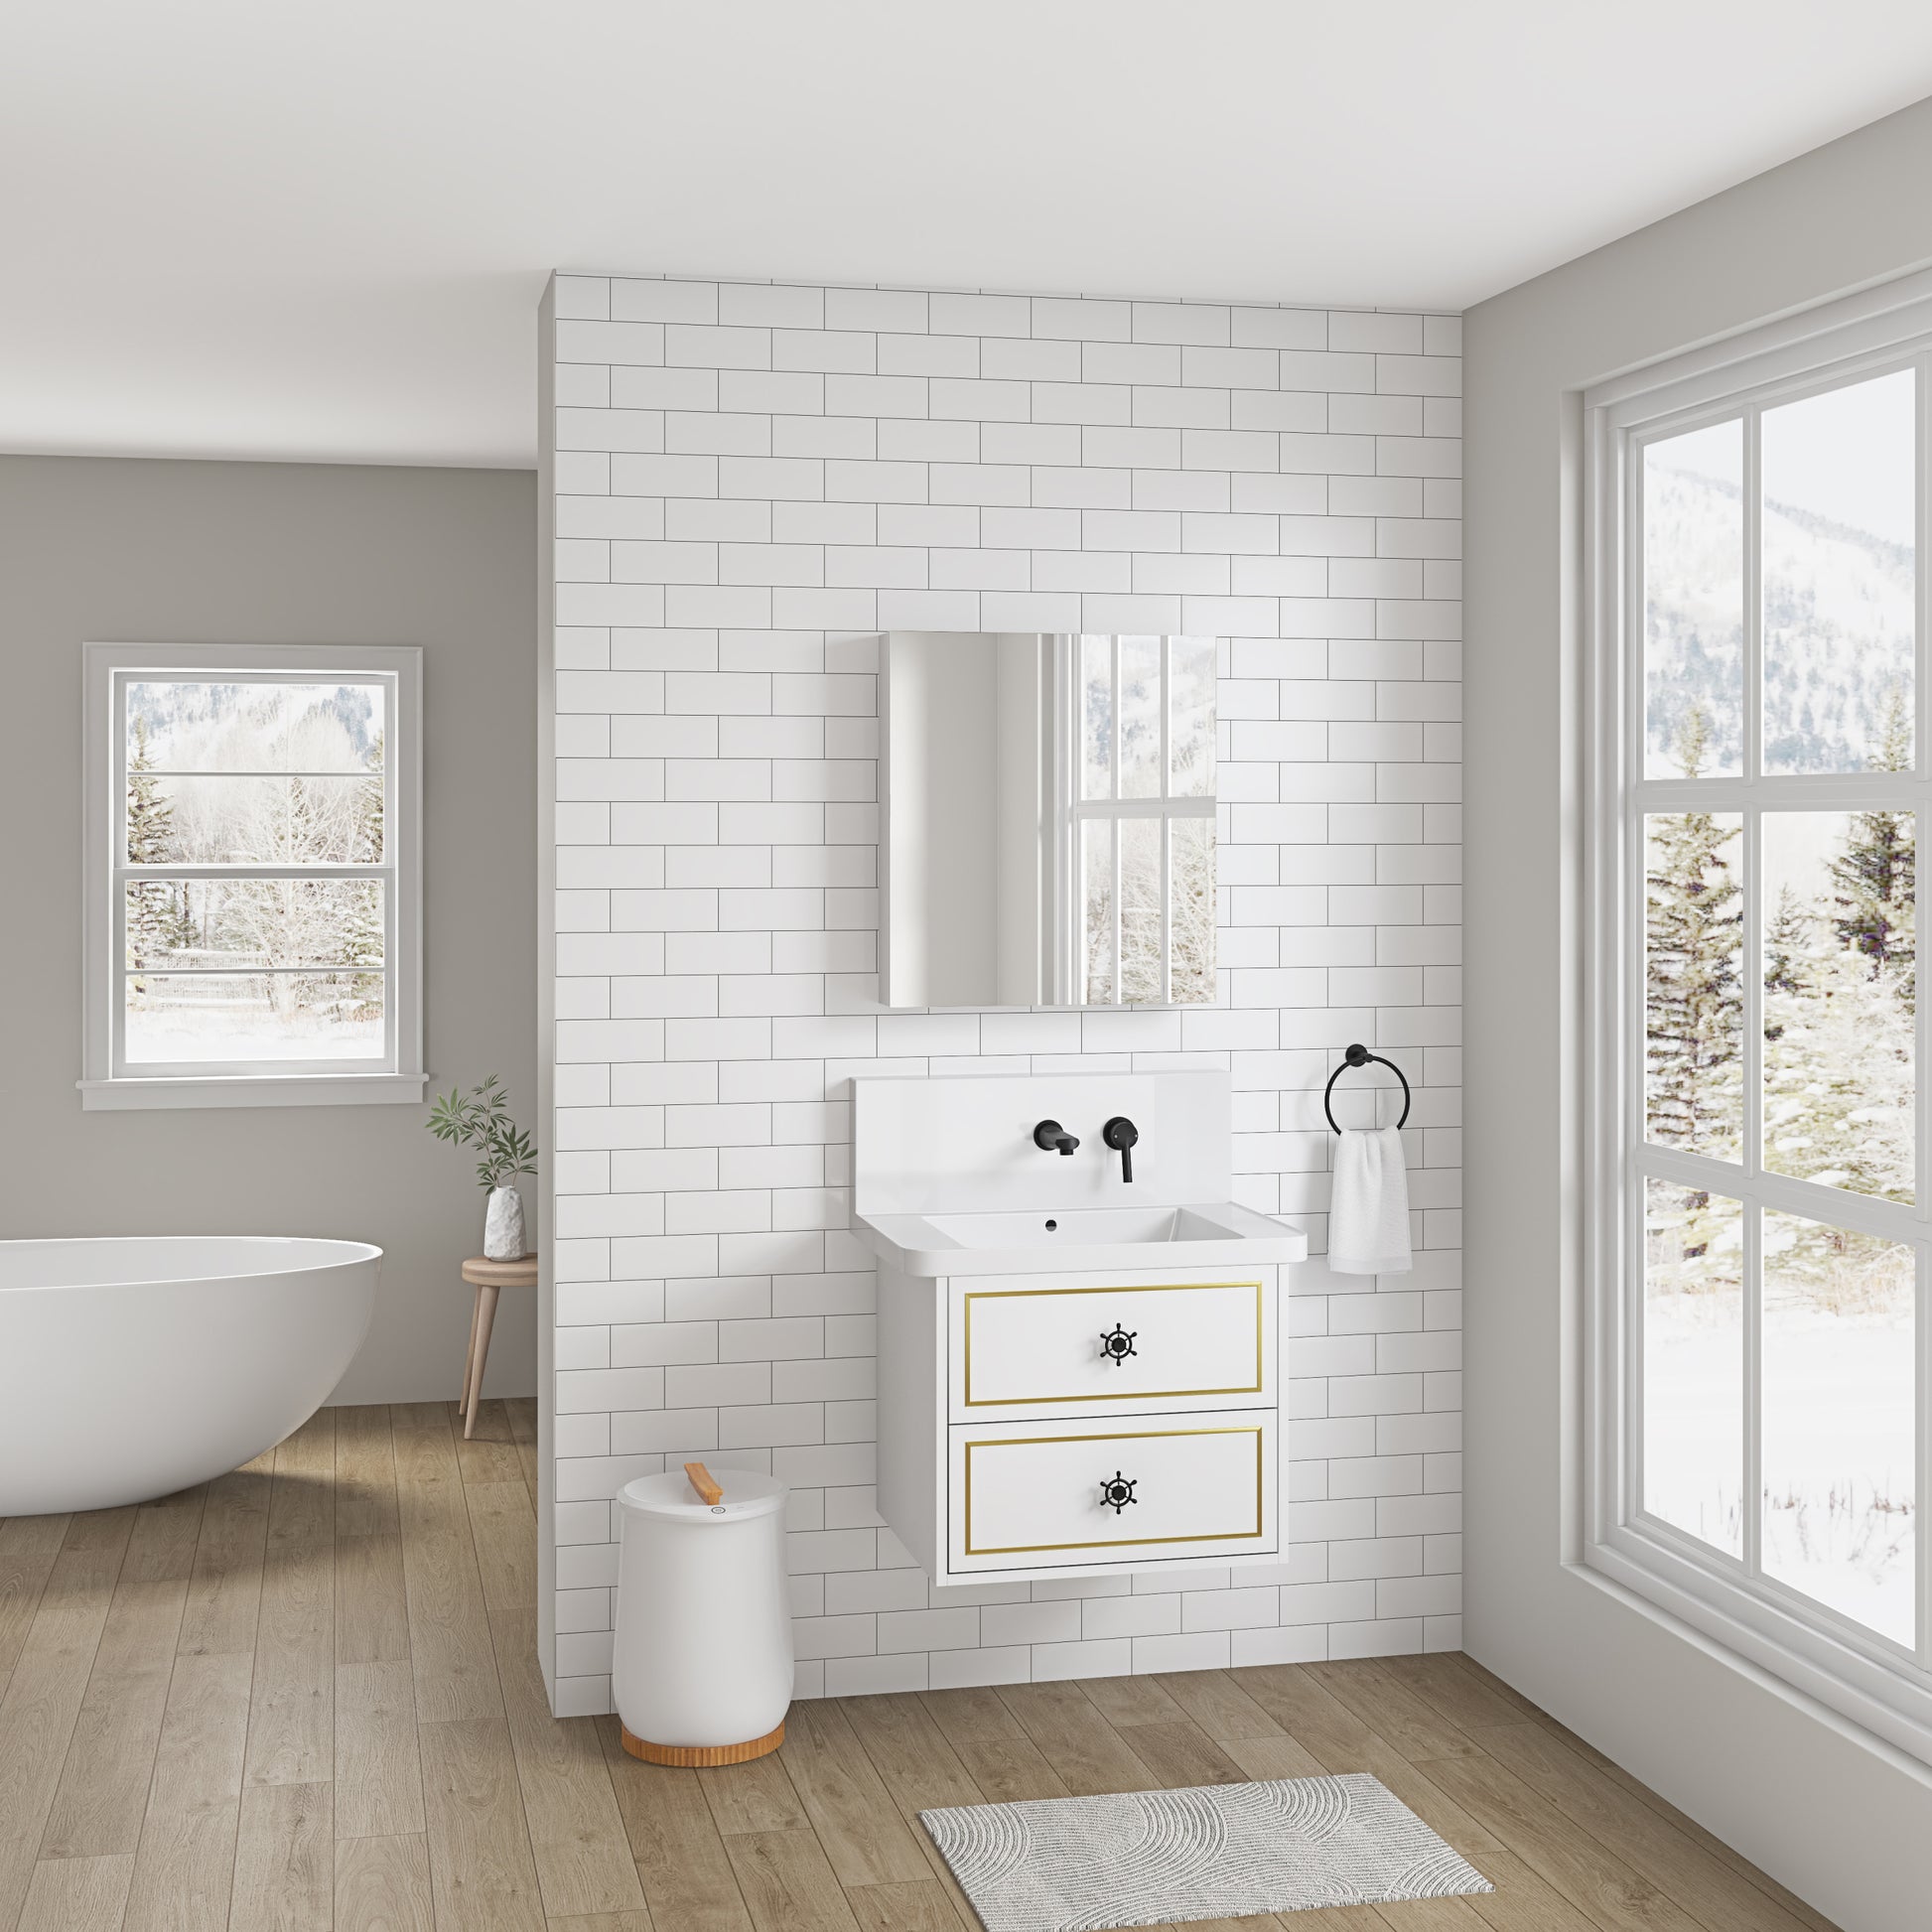 24" W x 26" H Single Door Bathroom Medicine Cabinet white-engineered wood